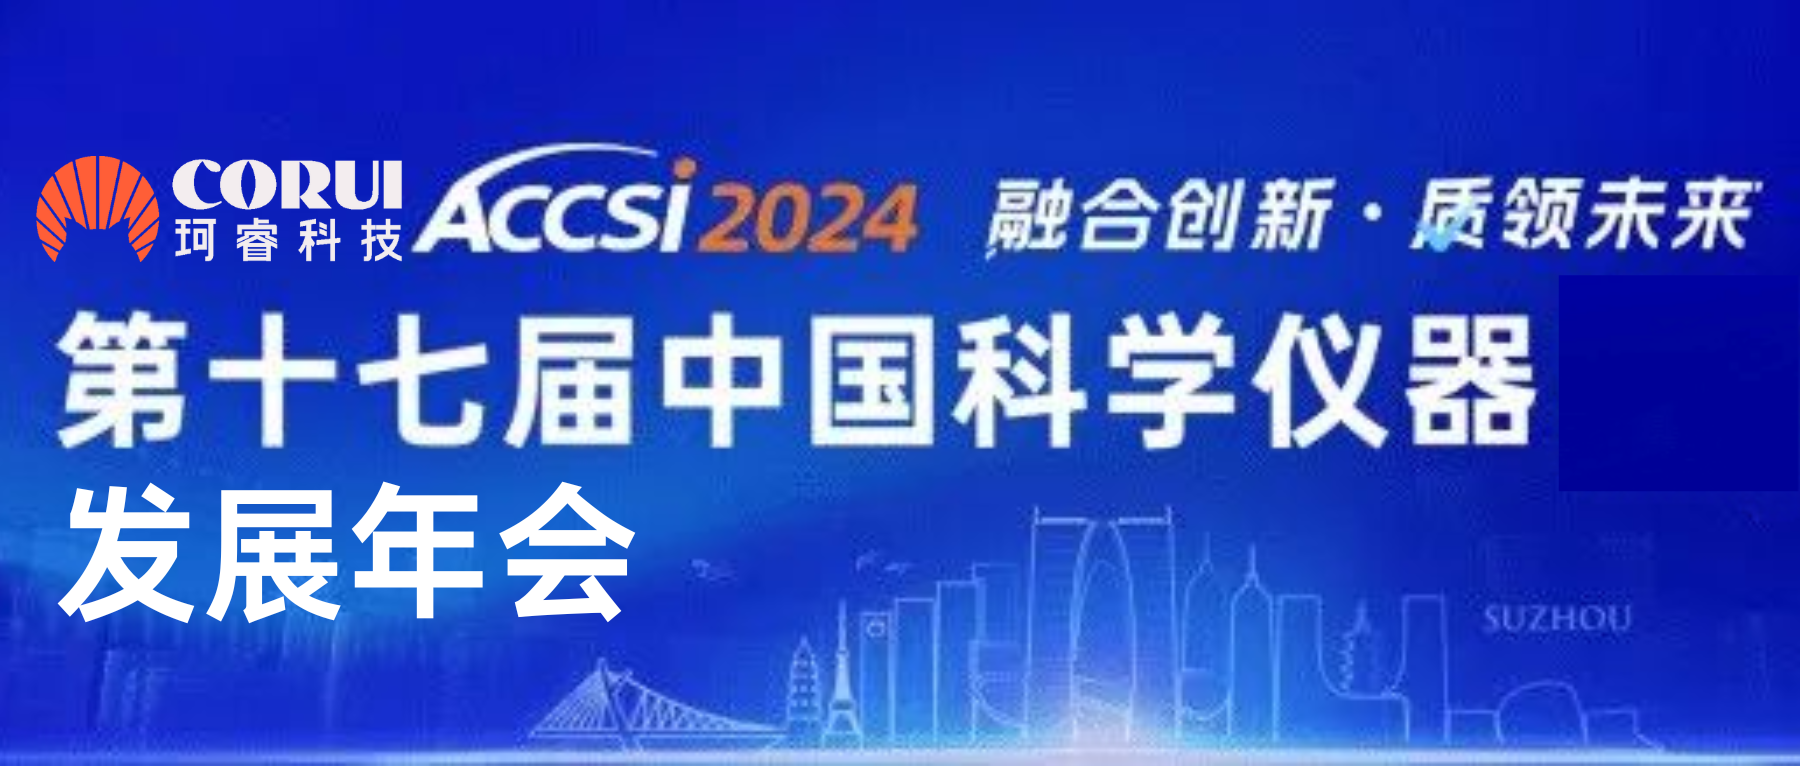 ACCSI2024，珂睿创新理念引领国产分析仪器发展方向